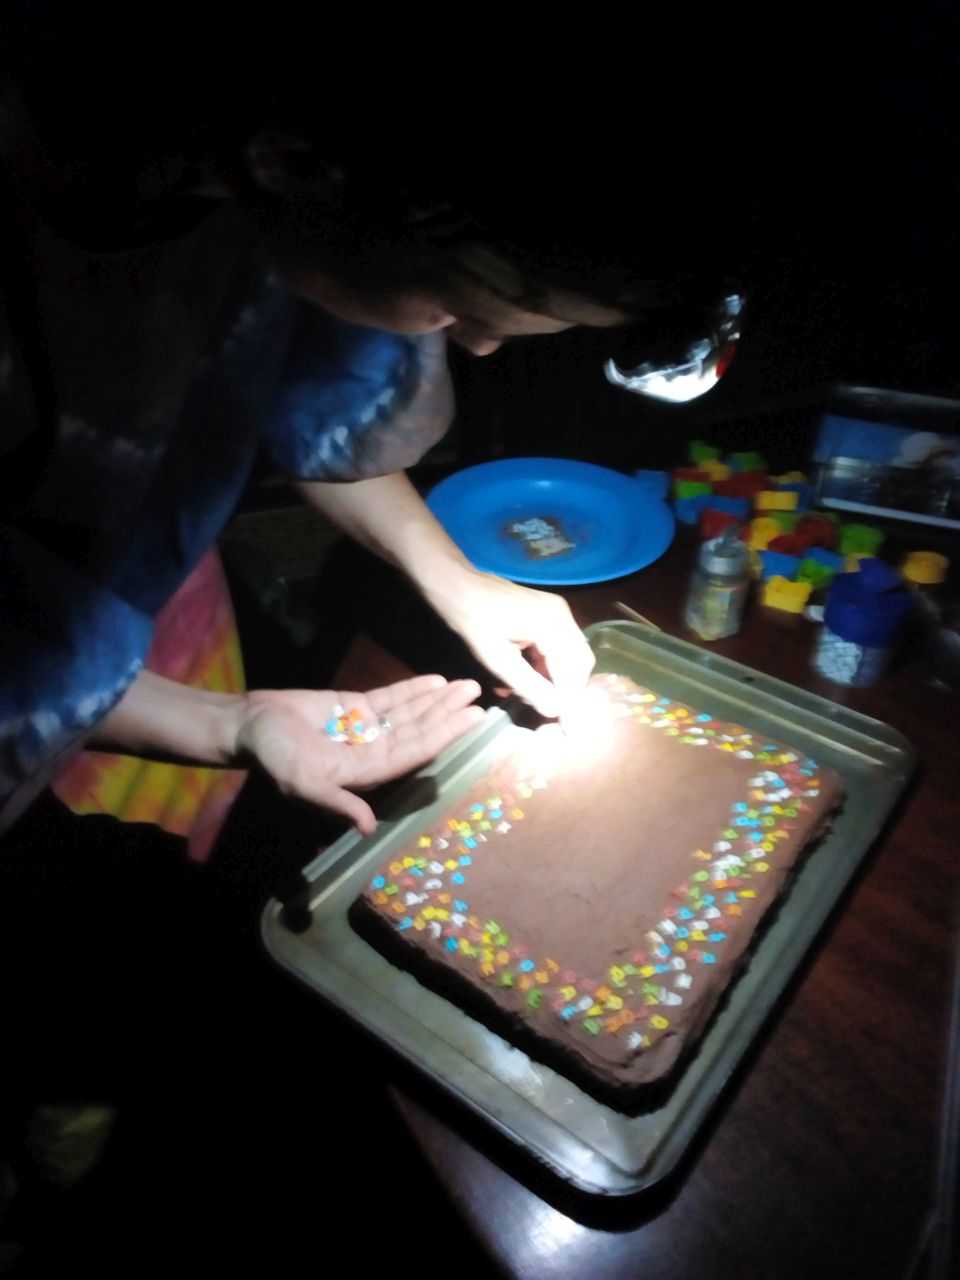 life balance - baking and decorating cakes at night...